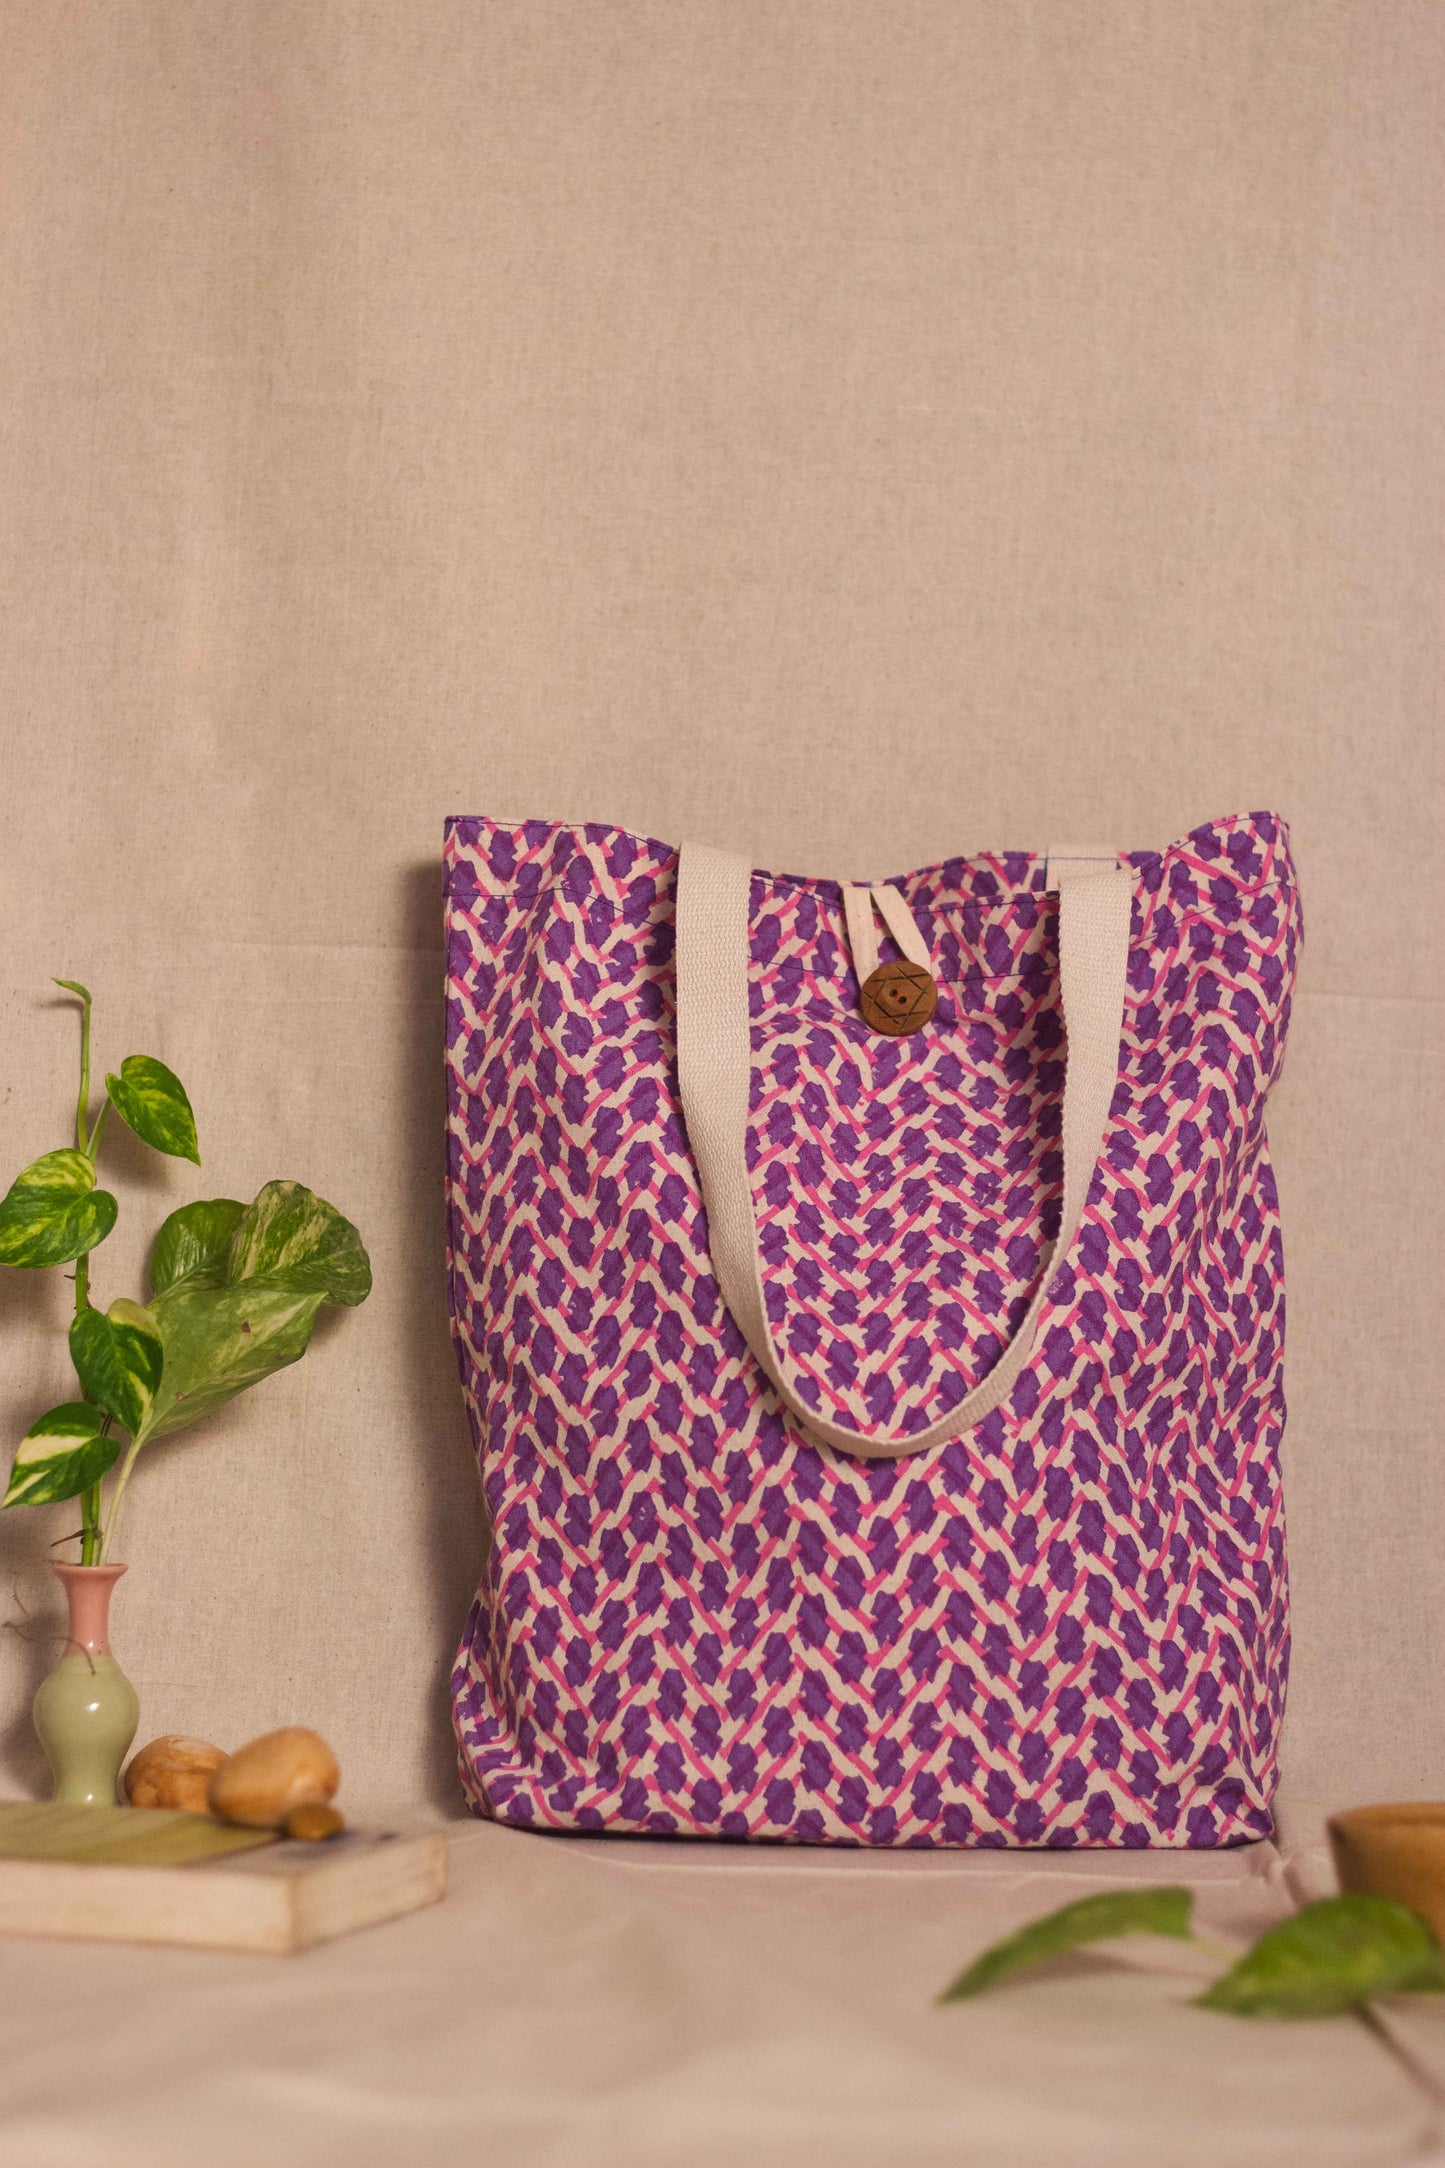 Cotton Shopping Tote Bag · Chevron Pink